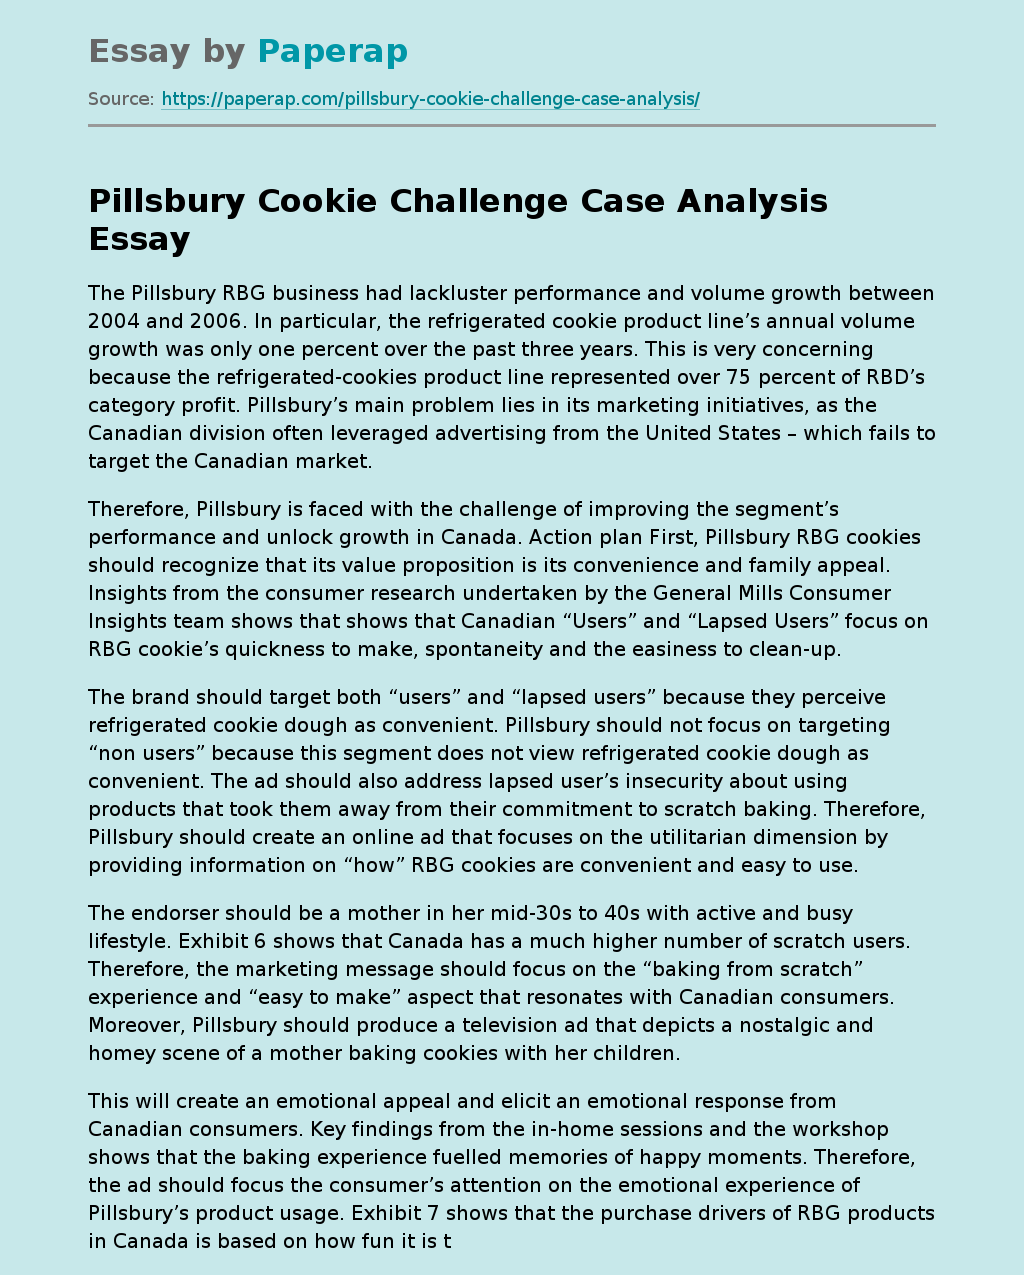 Pillsbury Cookie Challenge Case Analysis